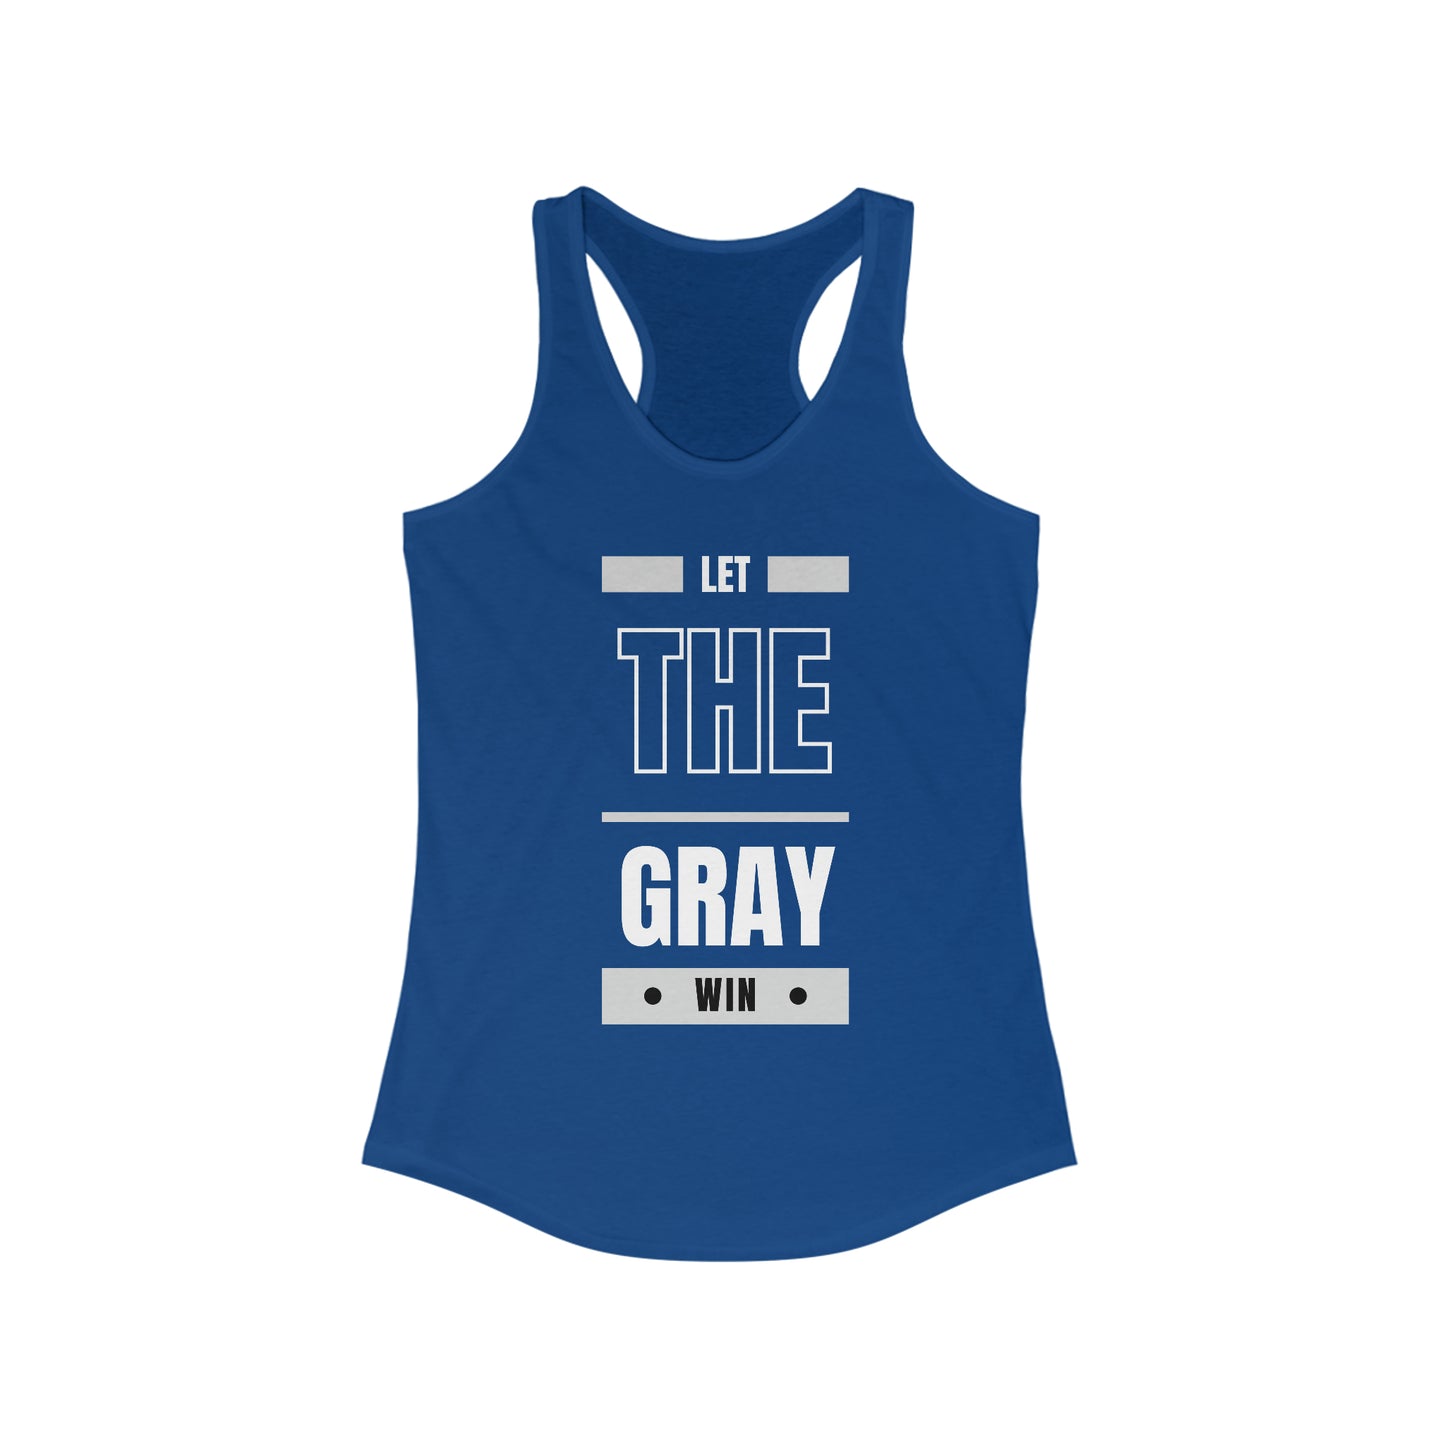 Let the Gray Win. Women's Ideal Racerback Tank